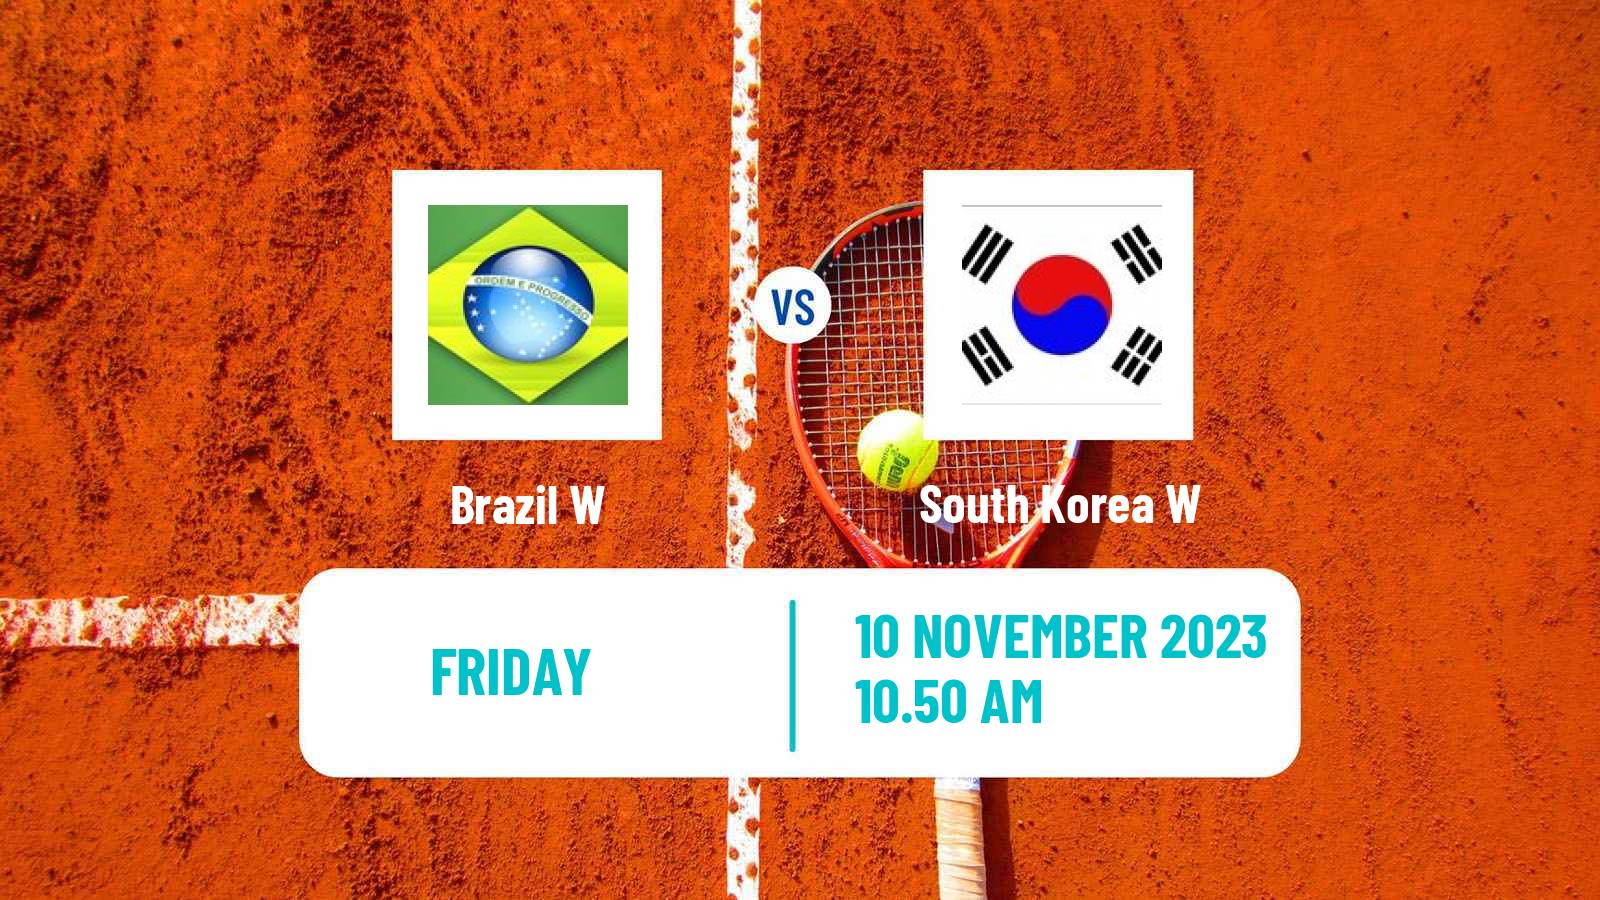 Tennis WTA Billie Jean King Cup World Group Teams Brazil W - South Korea W